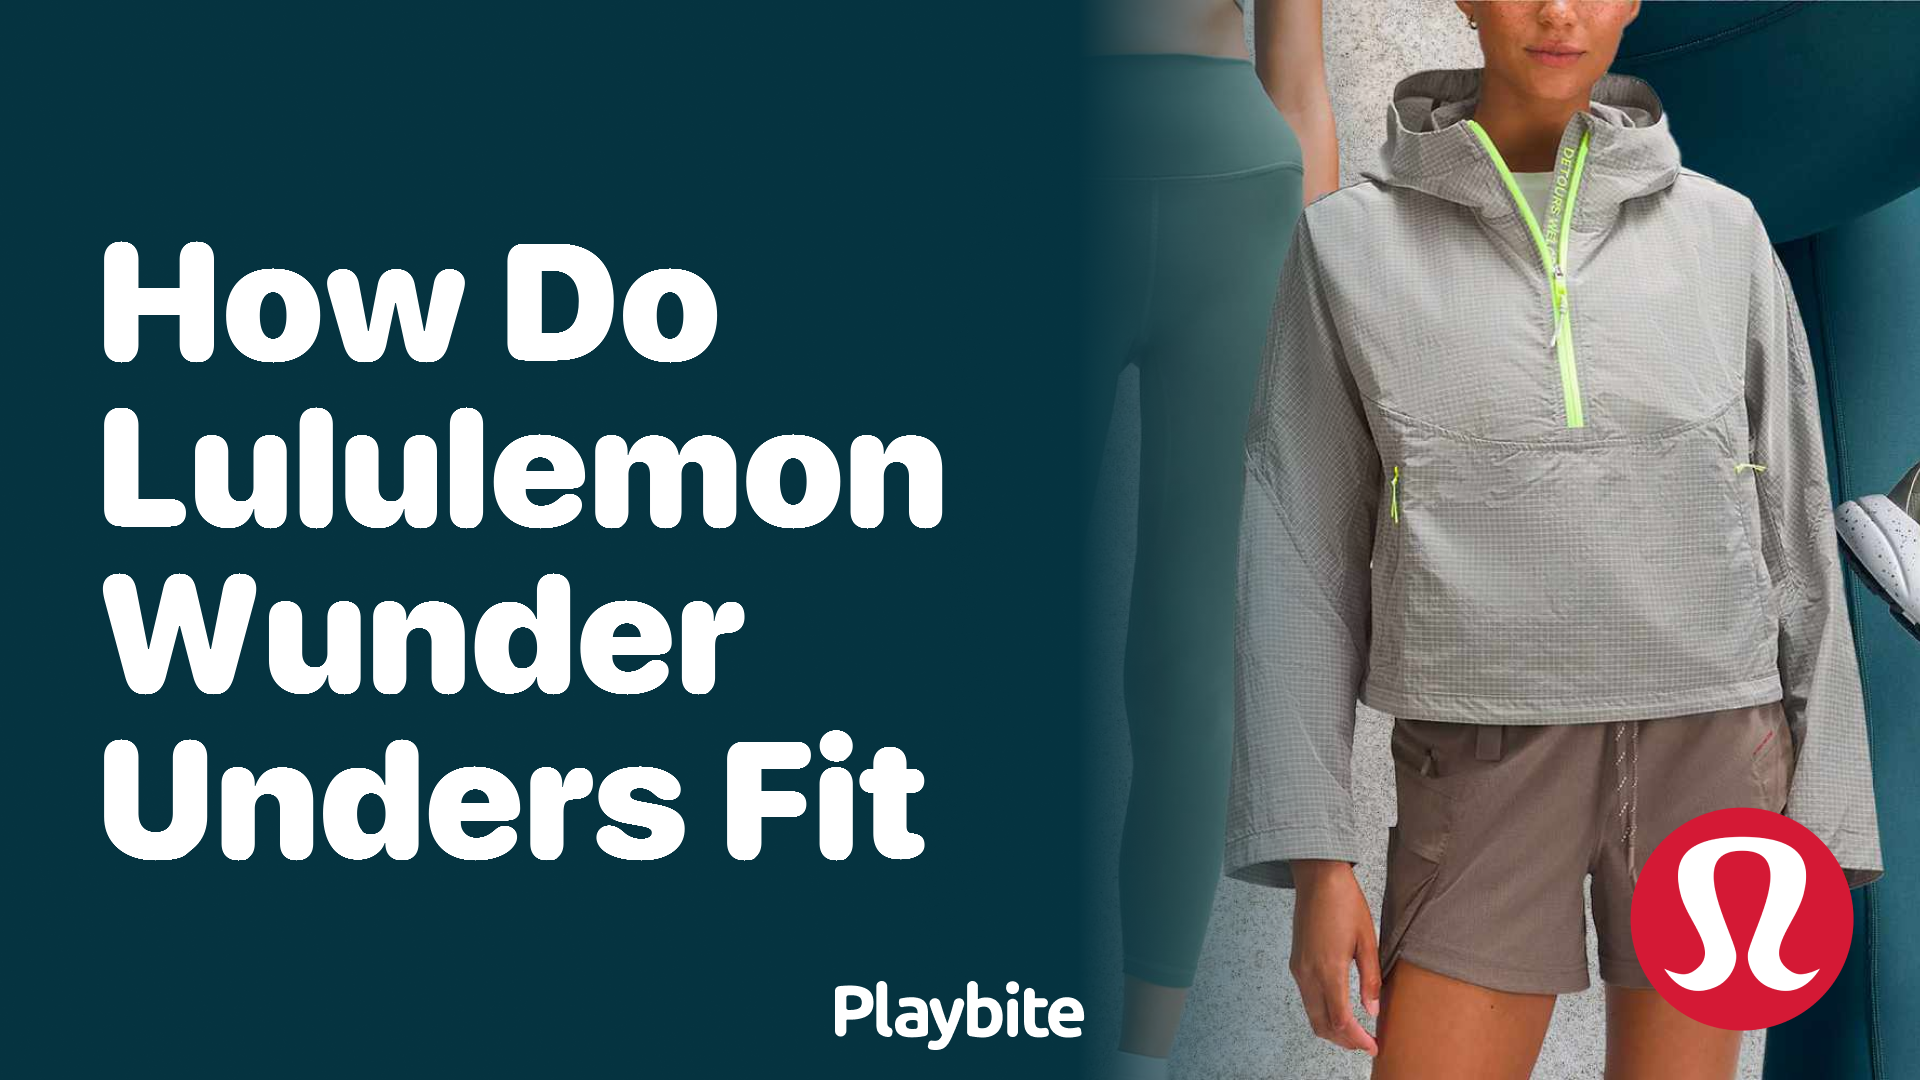 How Do Lululemon Wunder Unders Fit? - Playbite